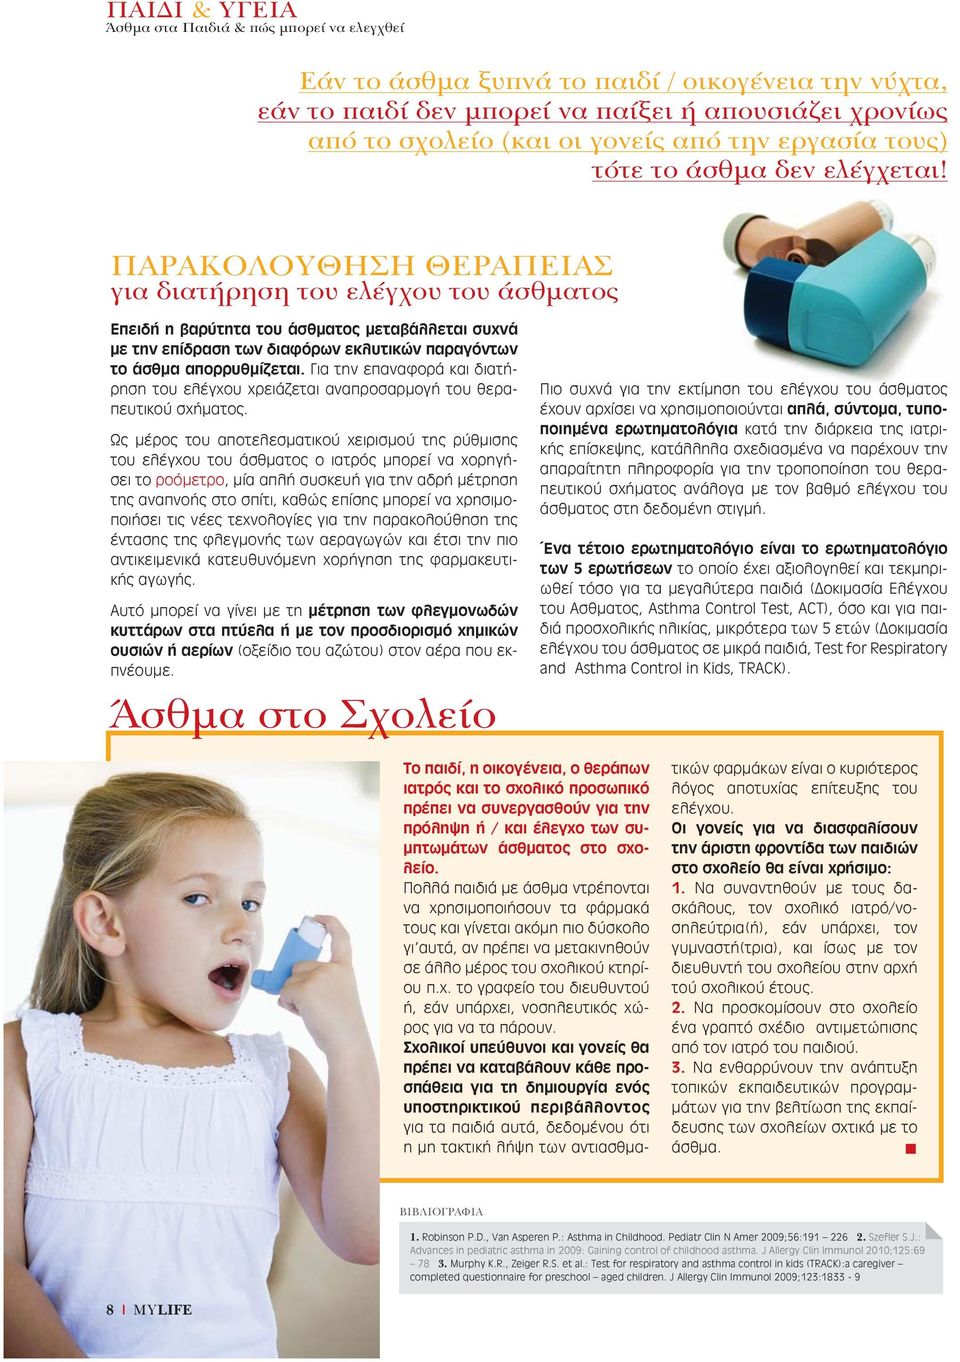 : Advances in pediatric asthma in 2009: Gaining control of childhood asthma. J Allergy Clin Immunol 2010;125:69 78 3. Murphy K.R., Zeiger R.S. et al.